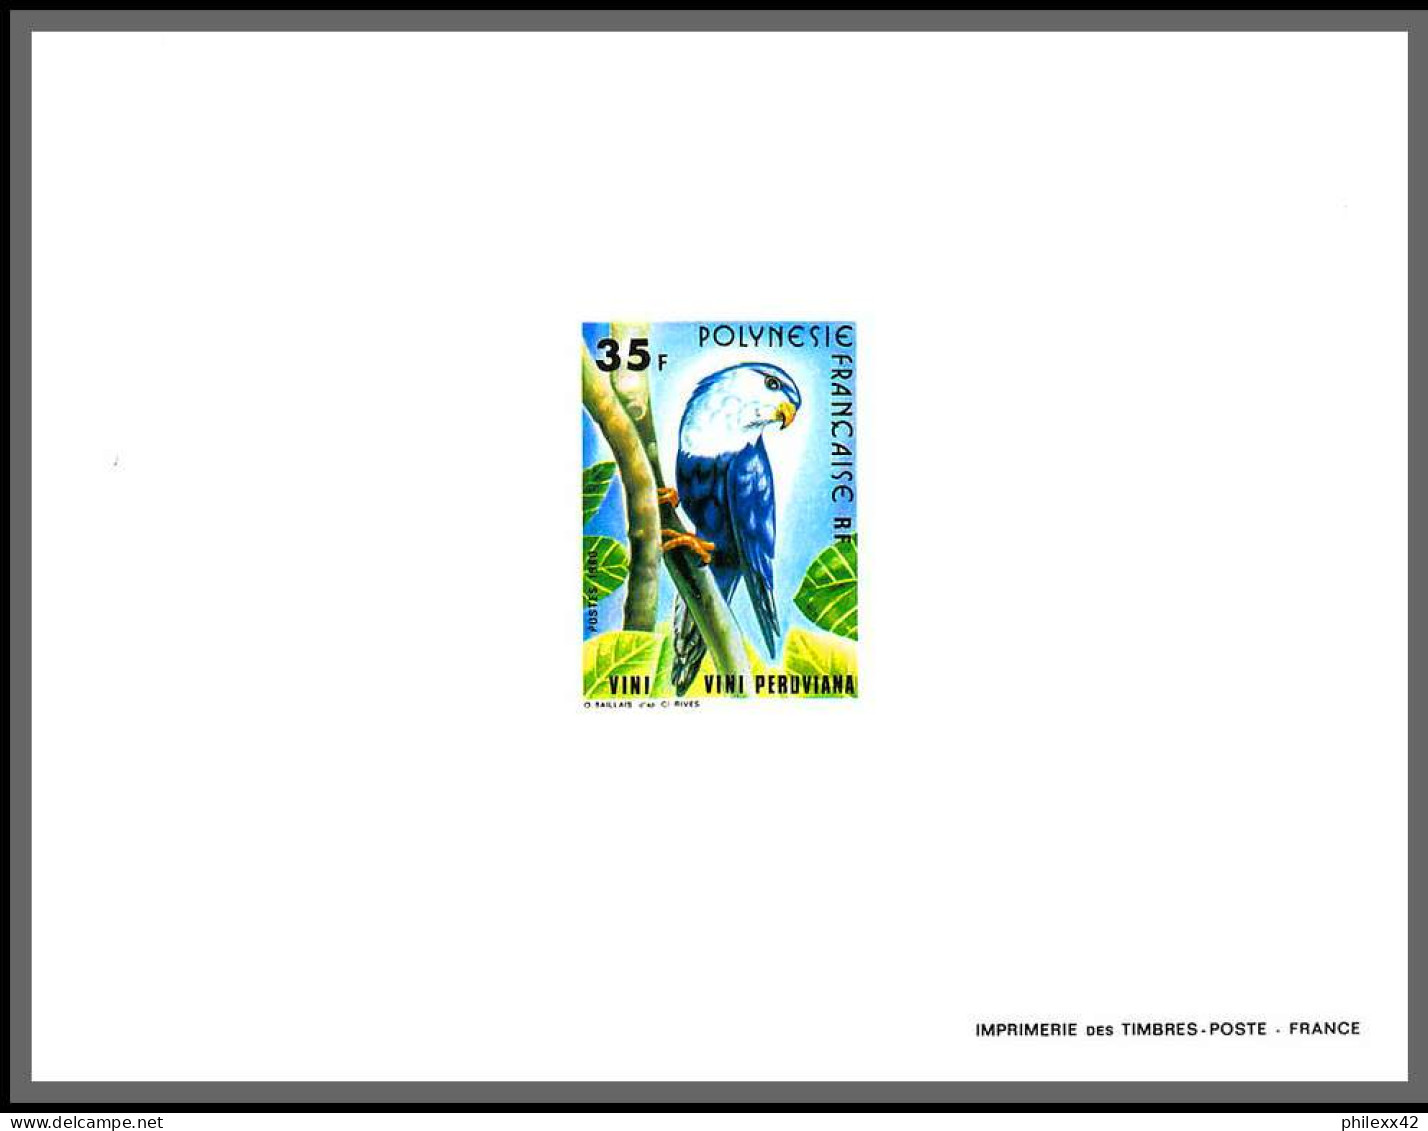 2174/ Polynésie N°156/158 Oiseaux Birds Gygis Alba Vini Periviana Fregata Fregate Lori Bleu 1980  épreuve Deluxe Proof  - Sin Dentar, Pruebas De Impresión Y Variedades